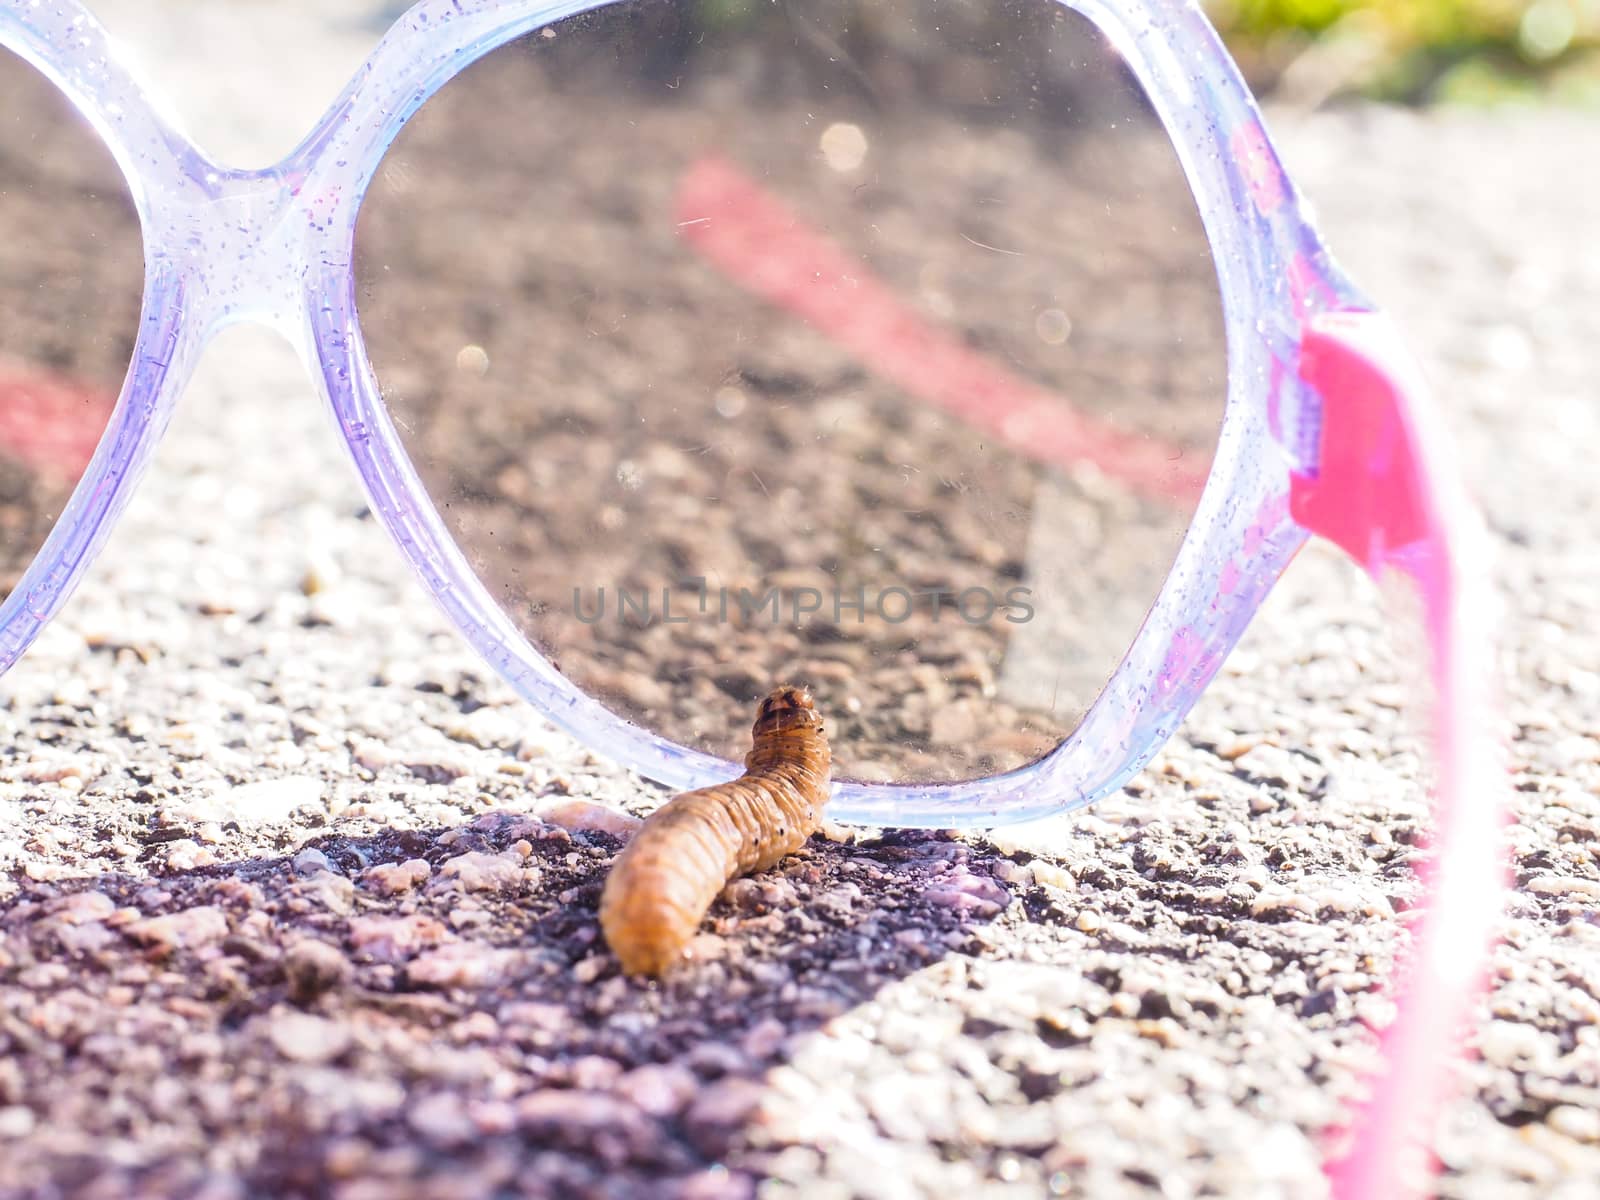 Larva and sunglasses by Arvebettum